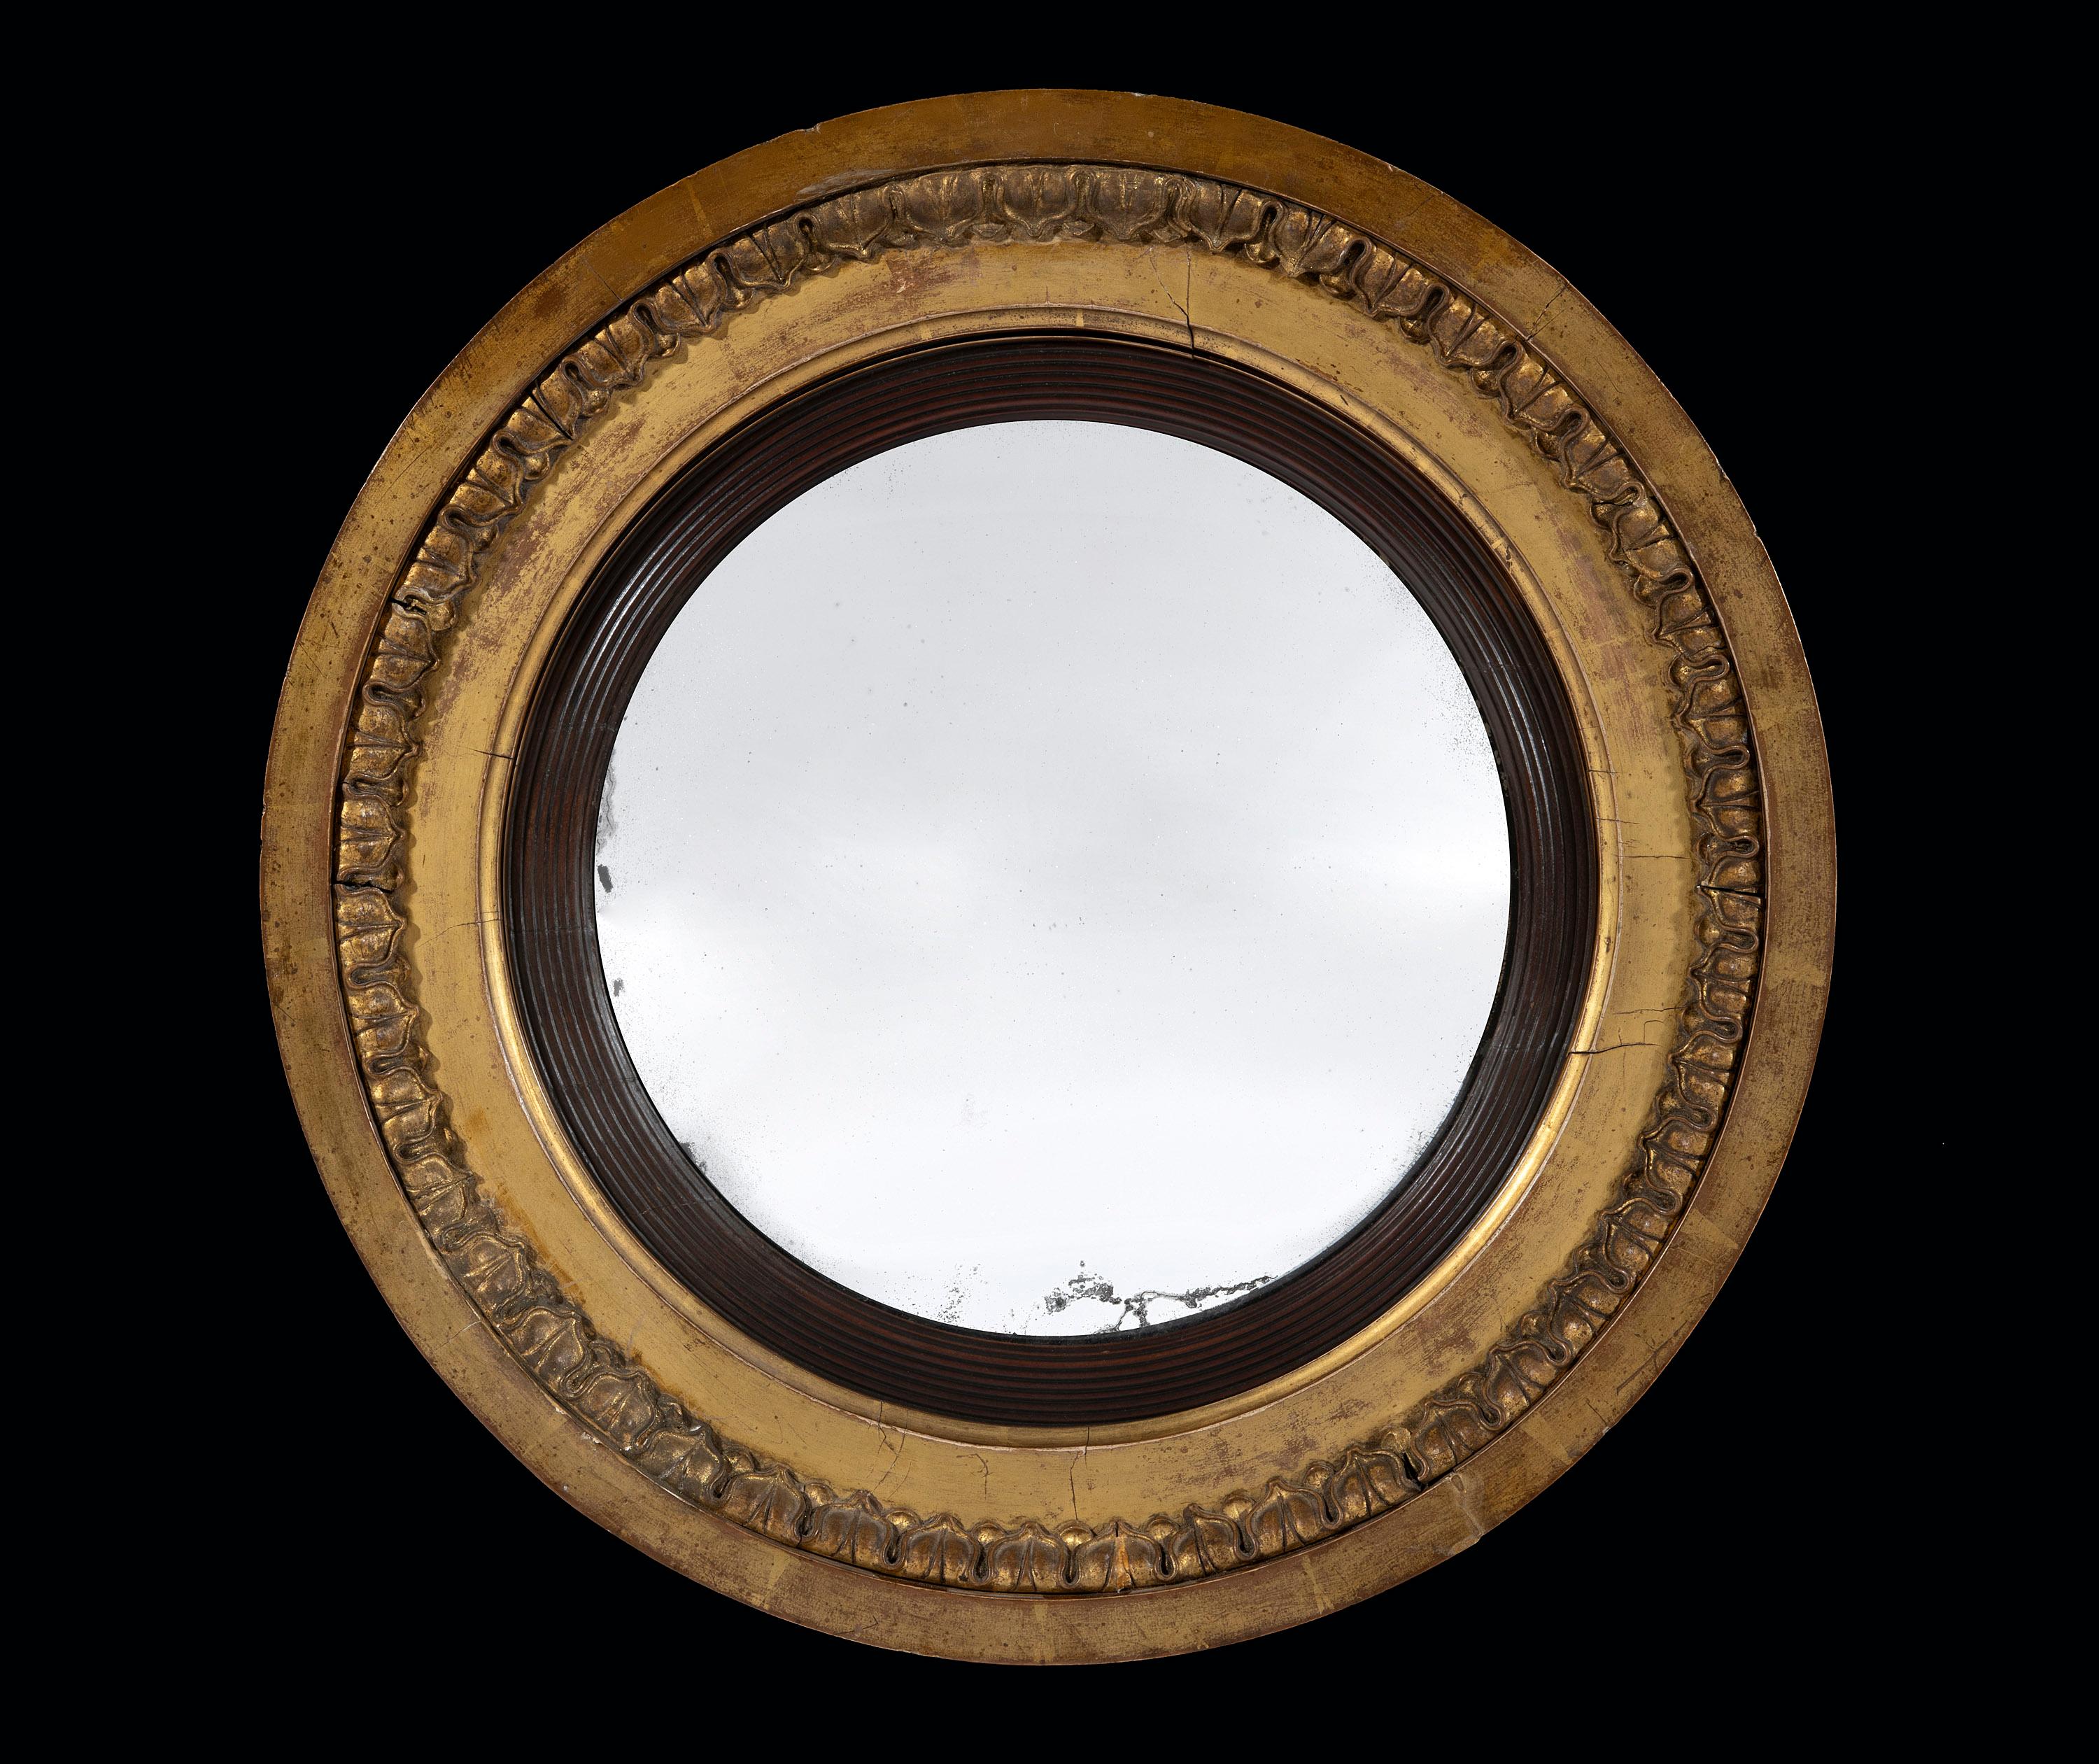 The crisply carved frame retains the original gilding. The convex plate is original.